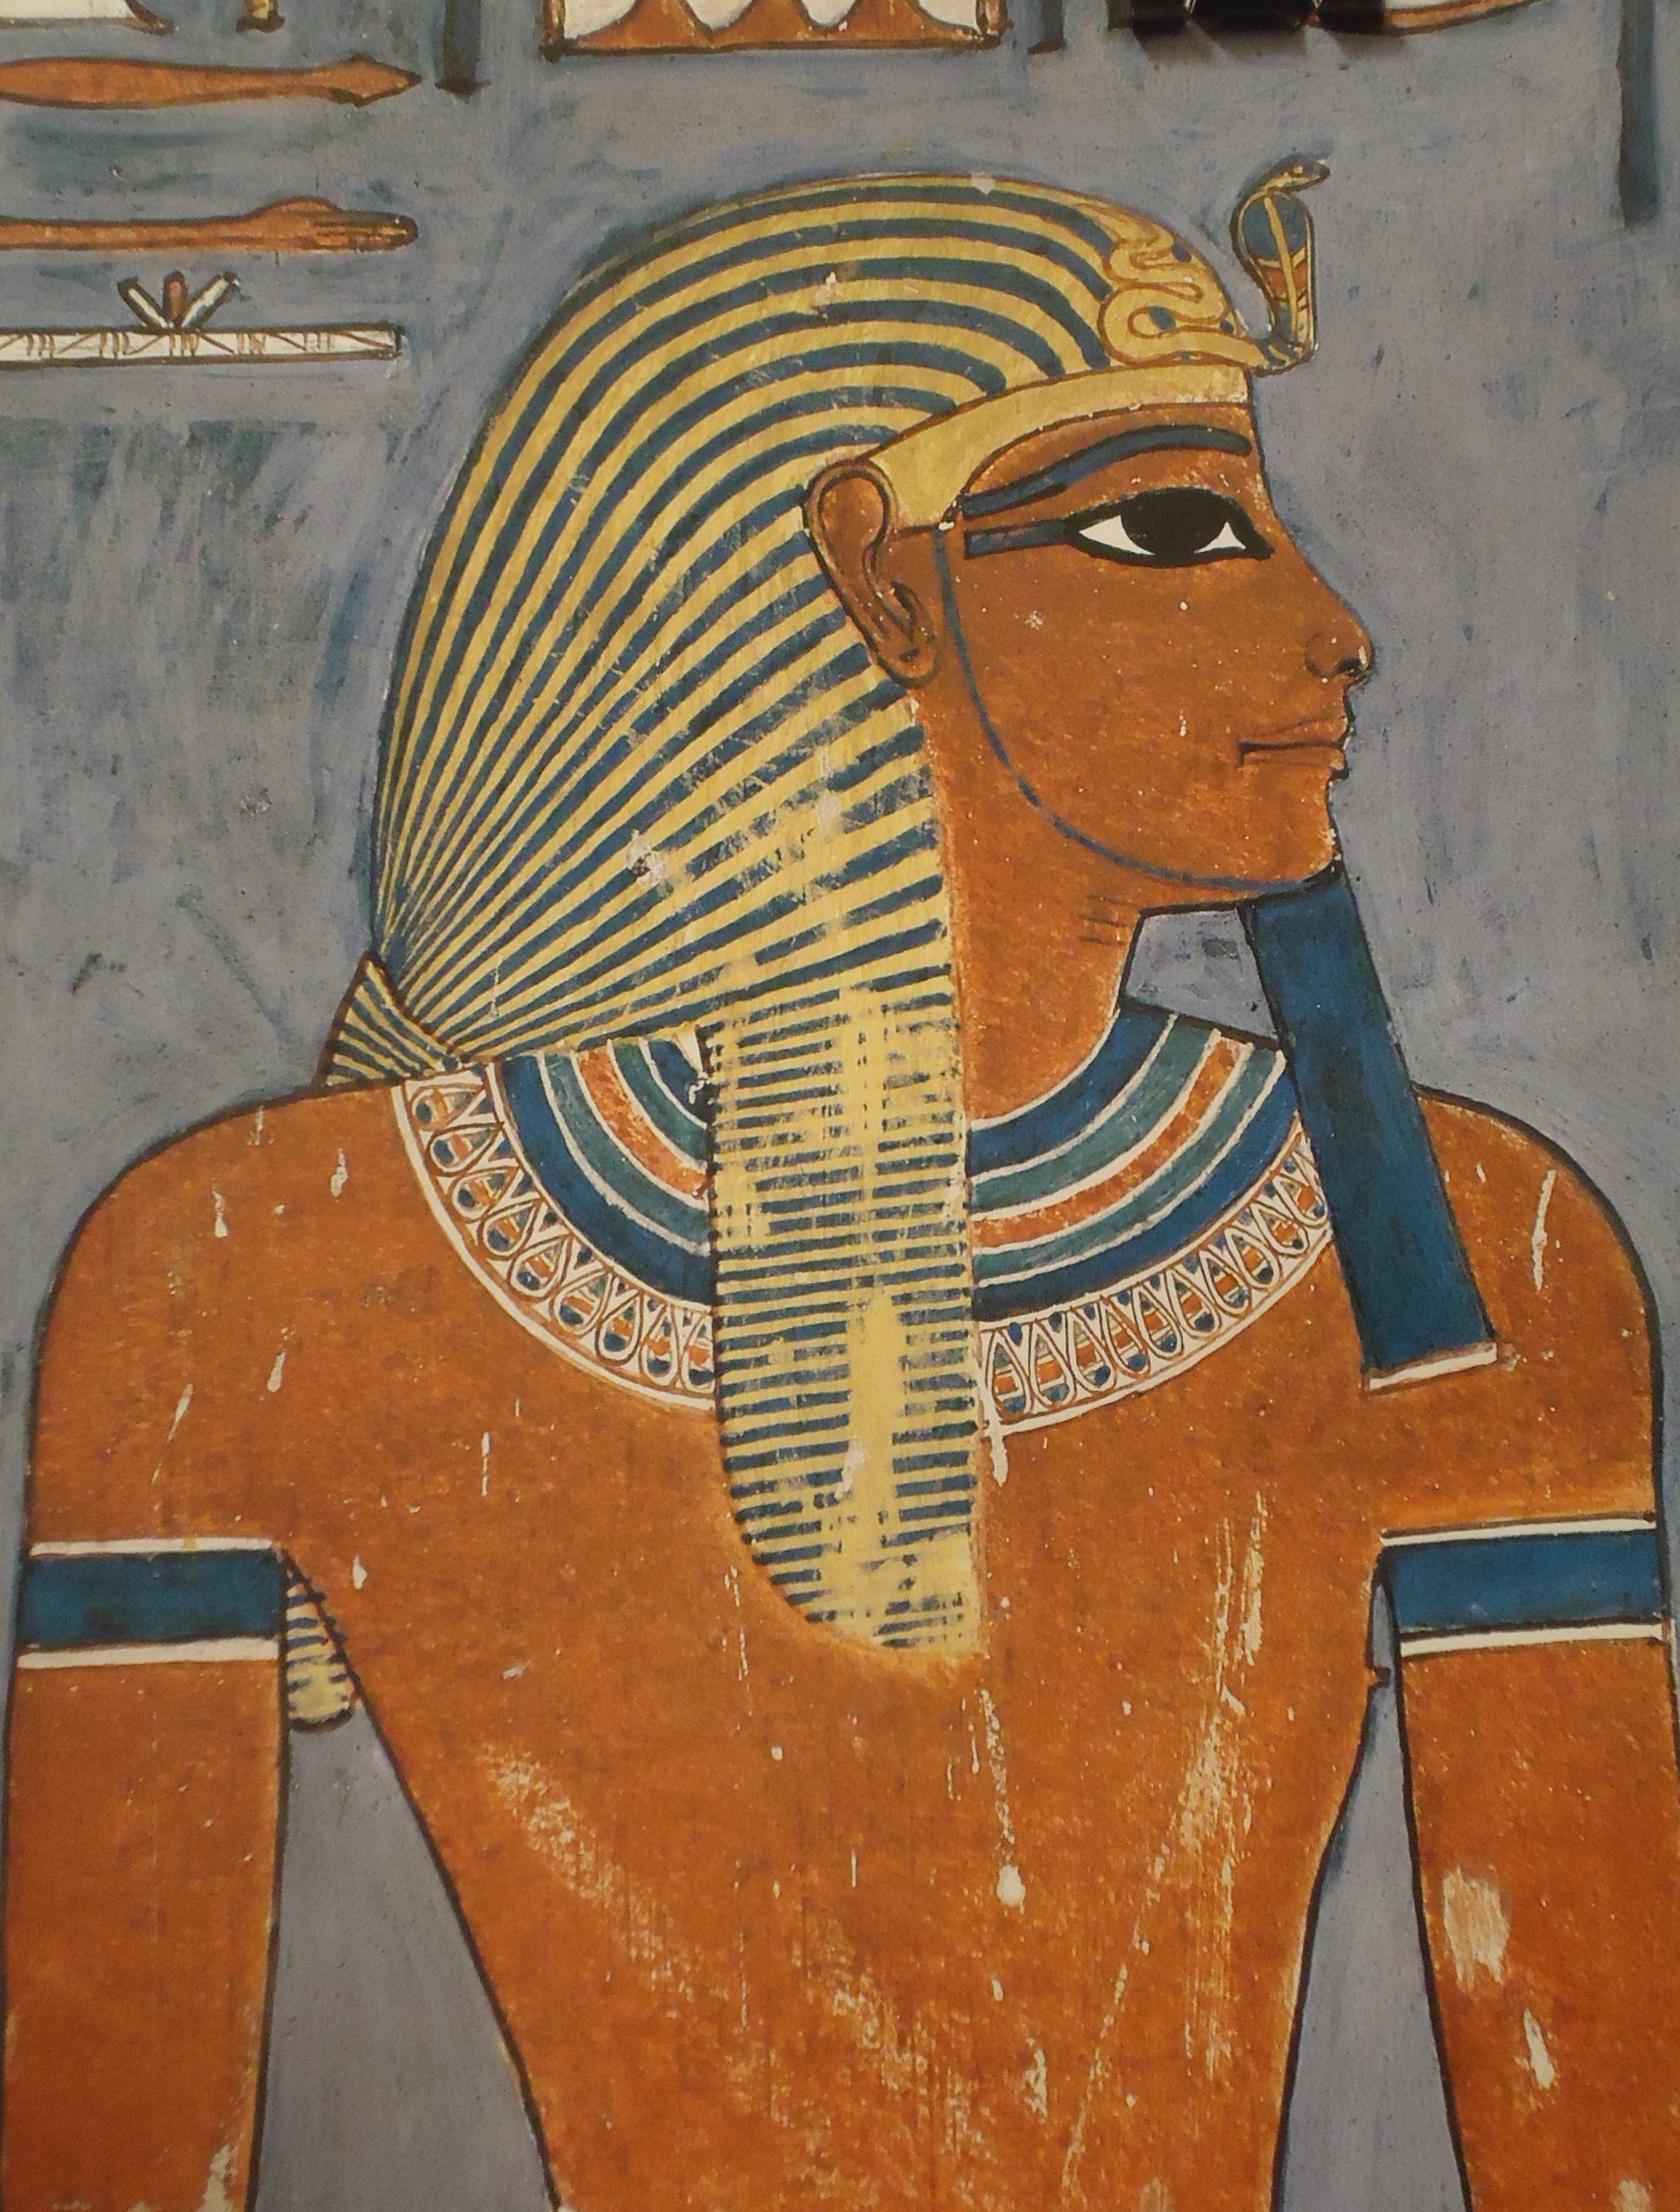 Egyptmural Collection List 古代エジプト壁画リストPhoto List